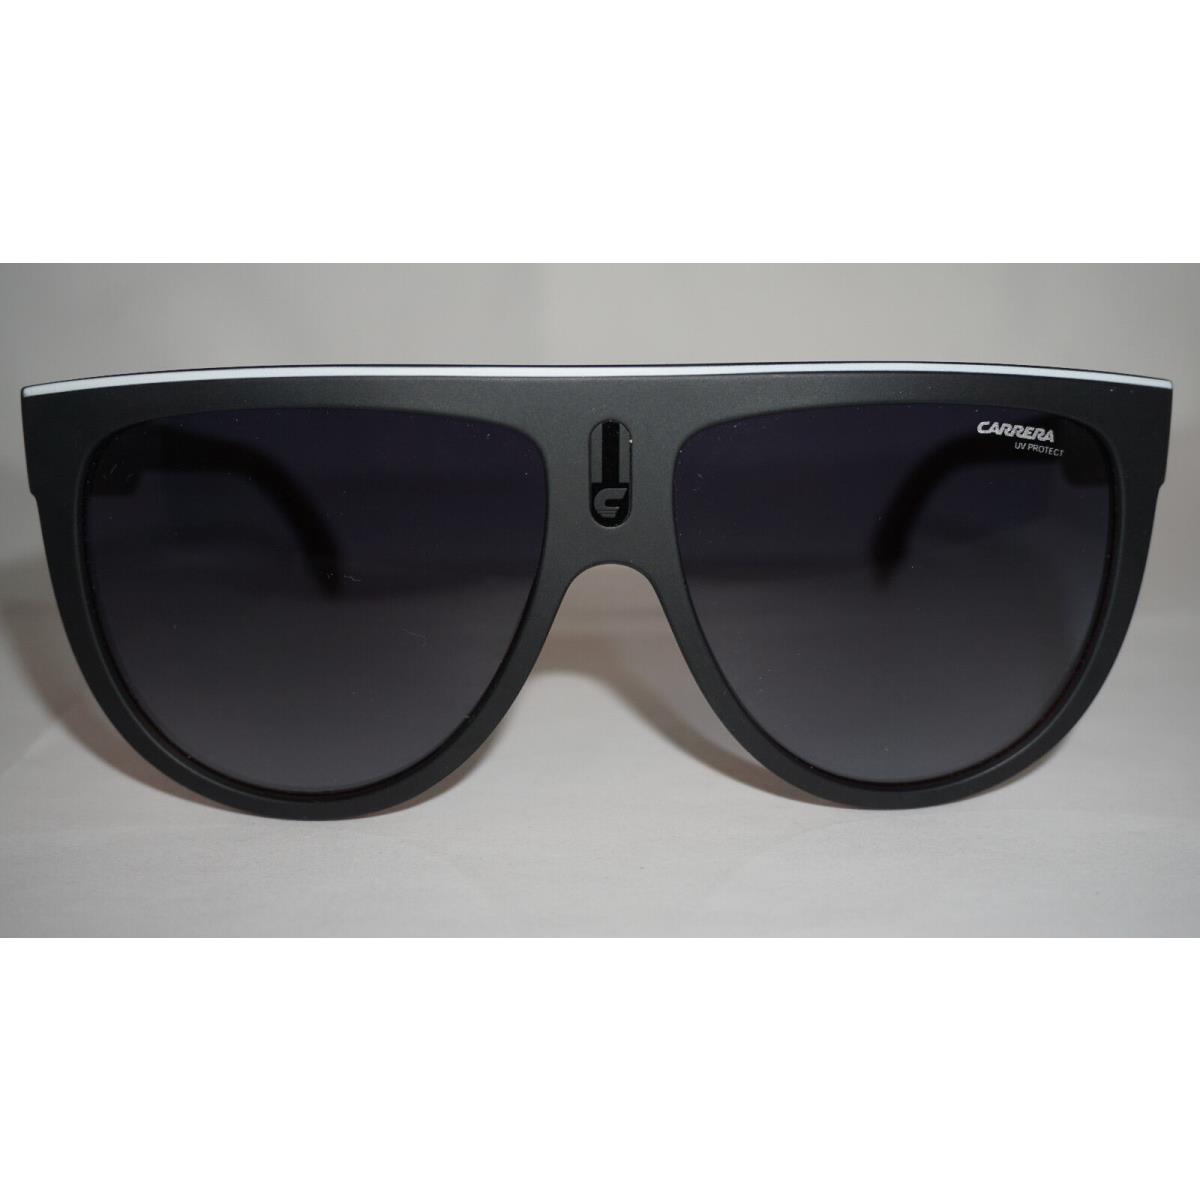 Carrera sunglasses  - Black Red Side Shields , Matte Black Red Frame, Grey Gradient Lens 2